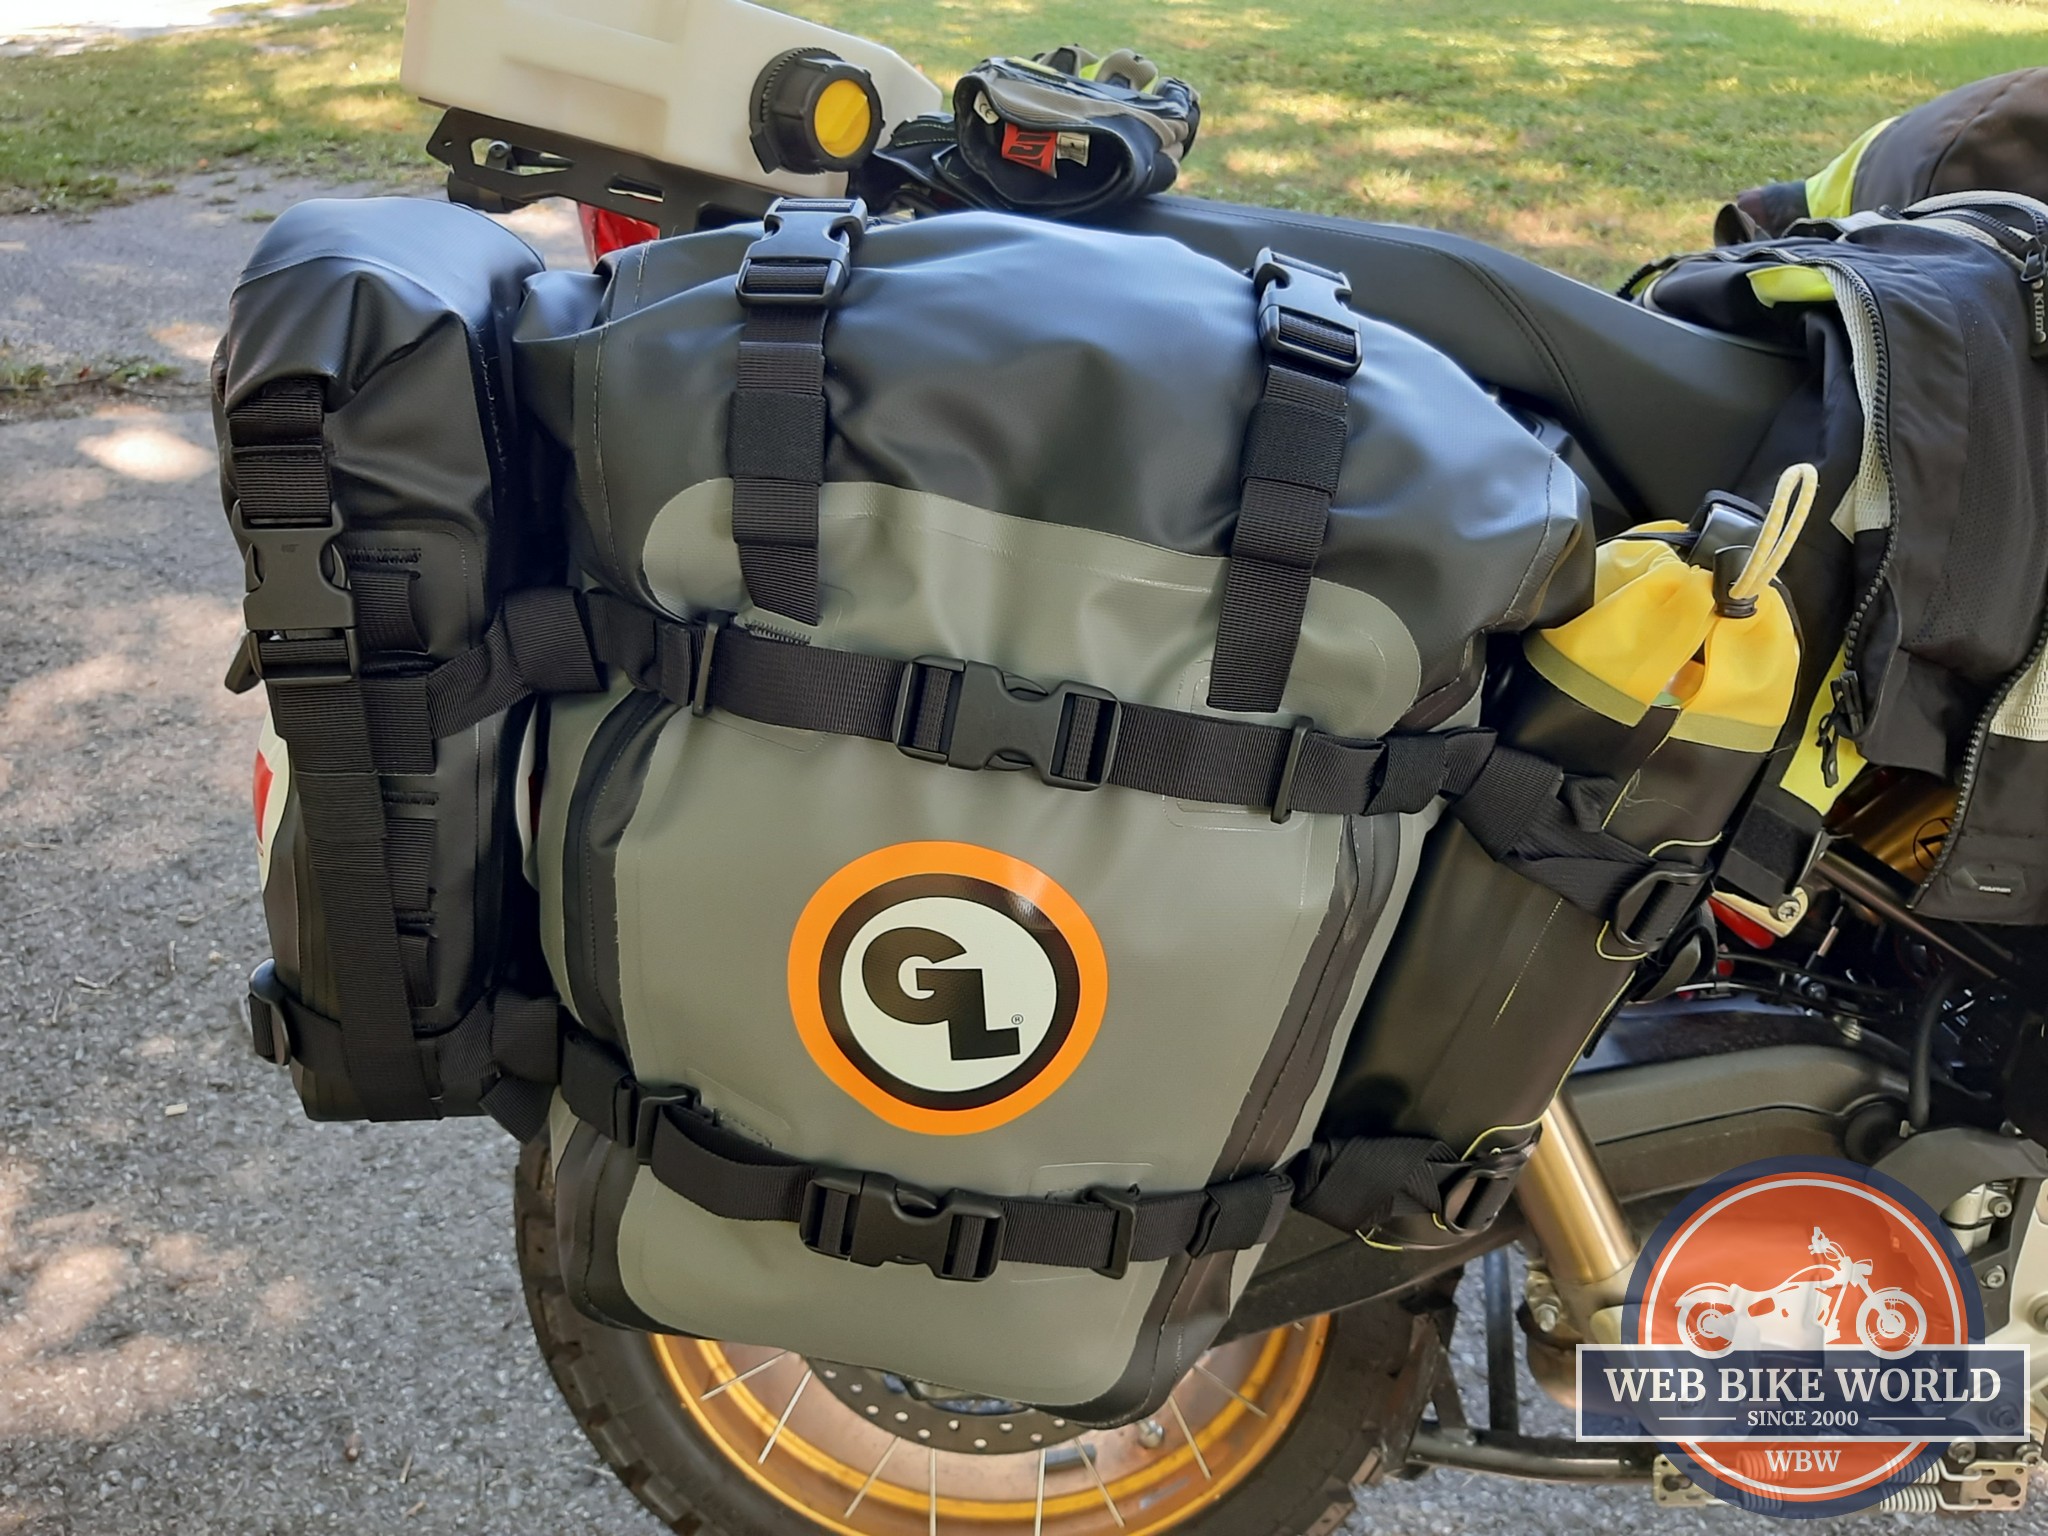 Giant Loop Tillamook Dry Bag Review (Long Term) - Motorcycle Gear Hub